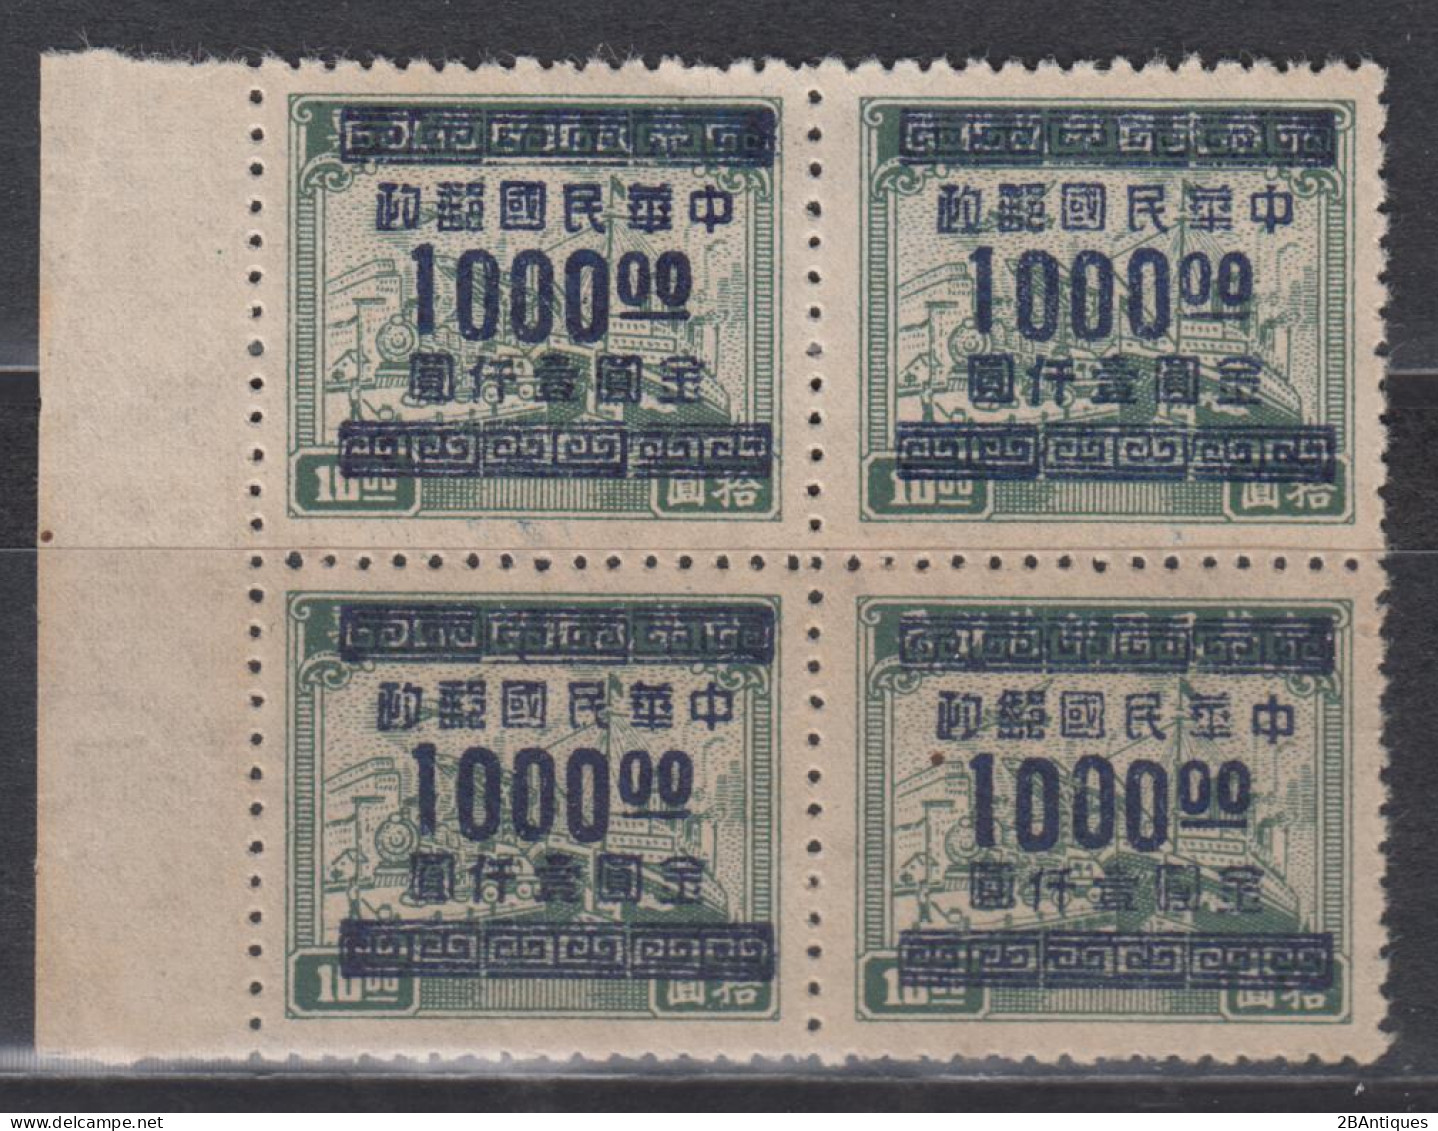 CHINA 1949 - Surcharge $1000 On $10 MNGAI BLOCK OF 4 - 1912-1949 Republic